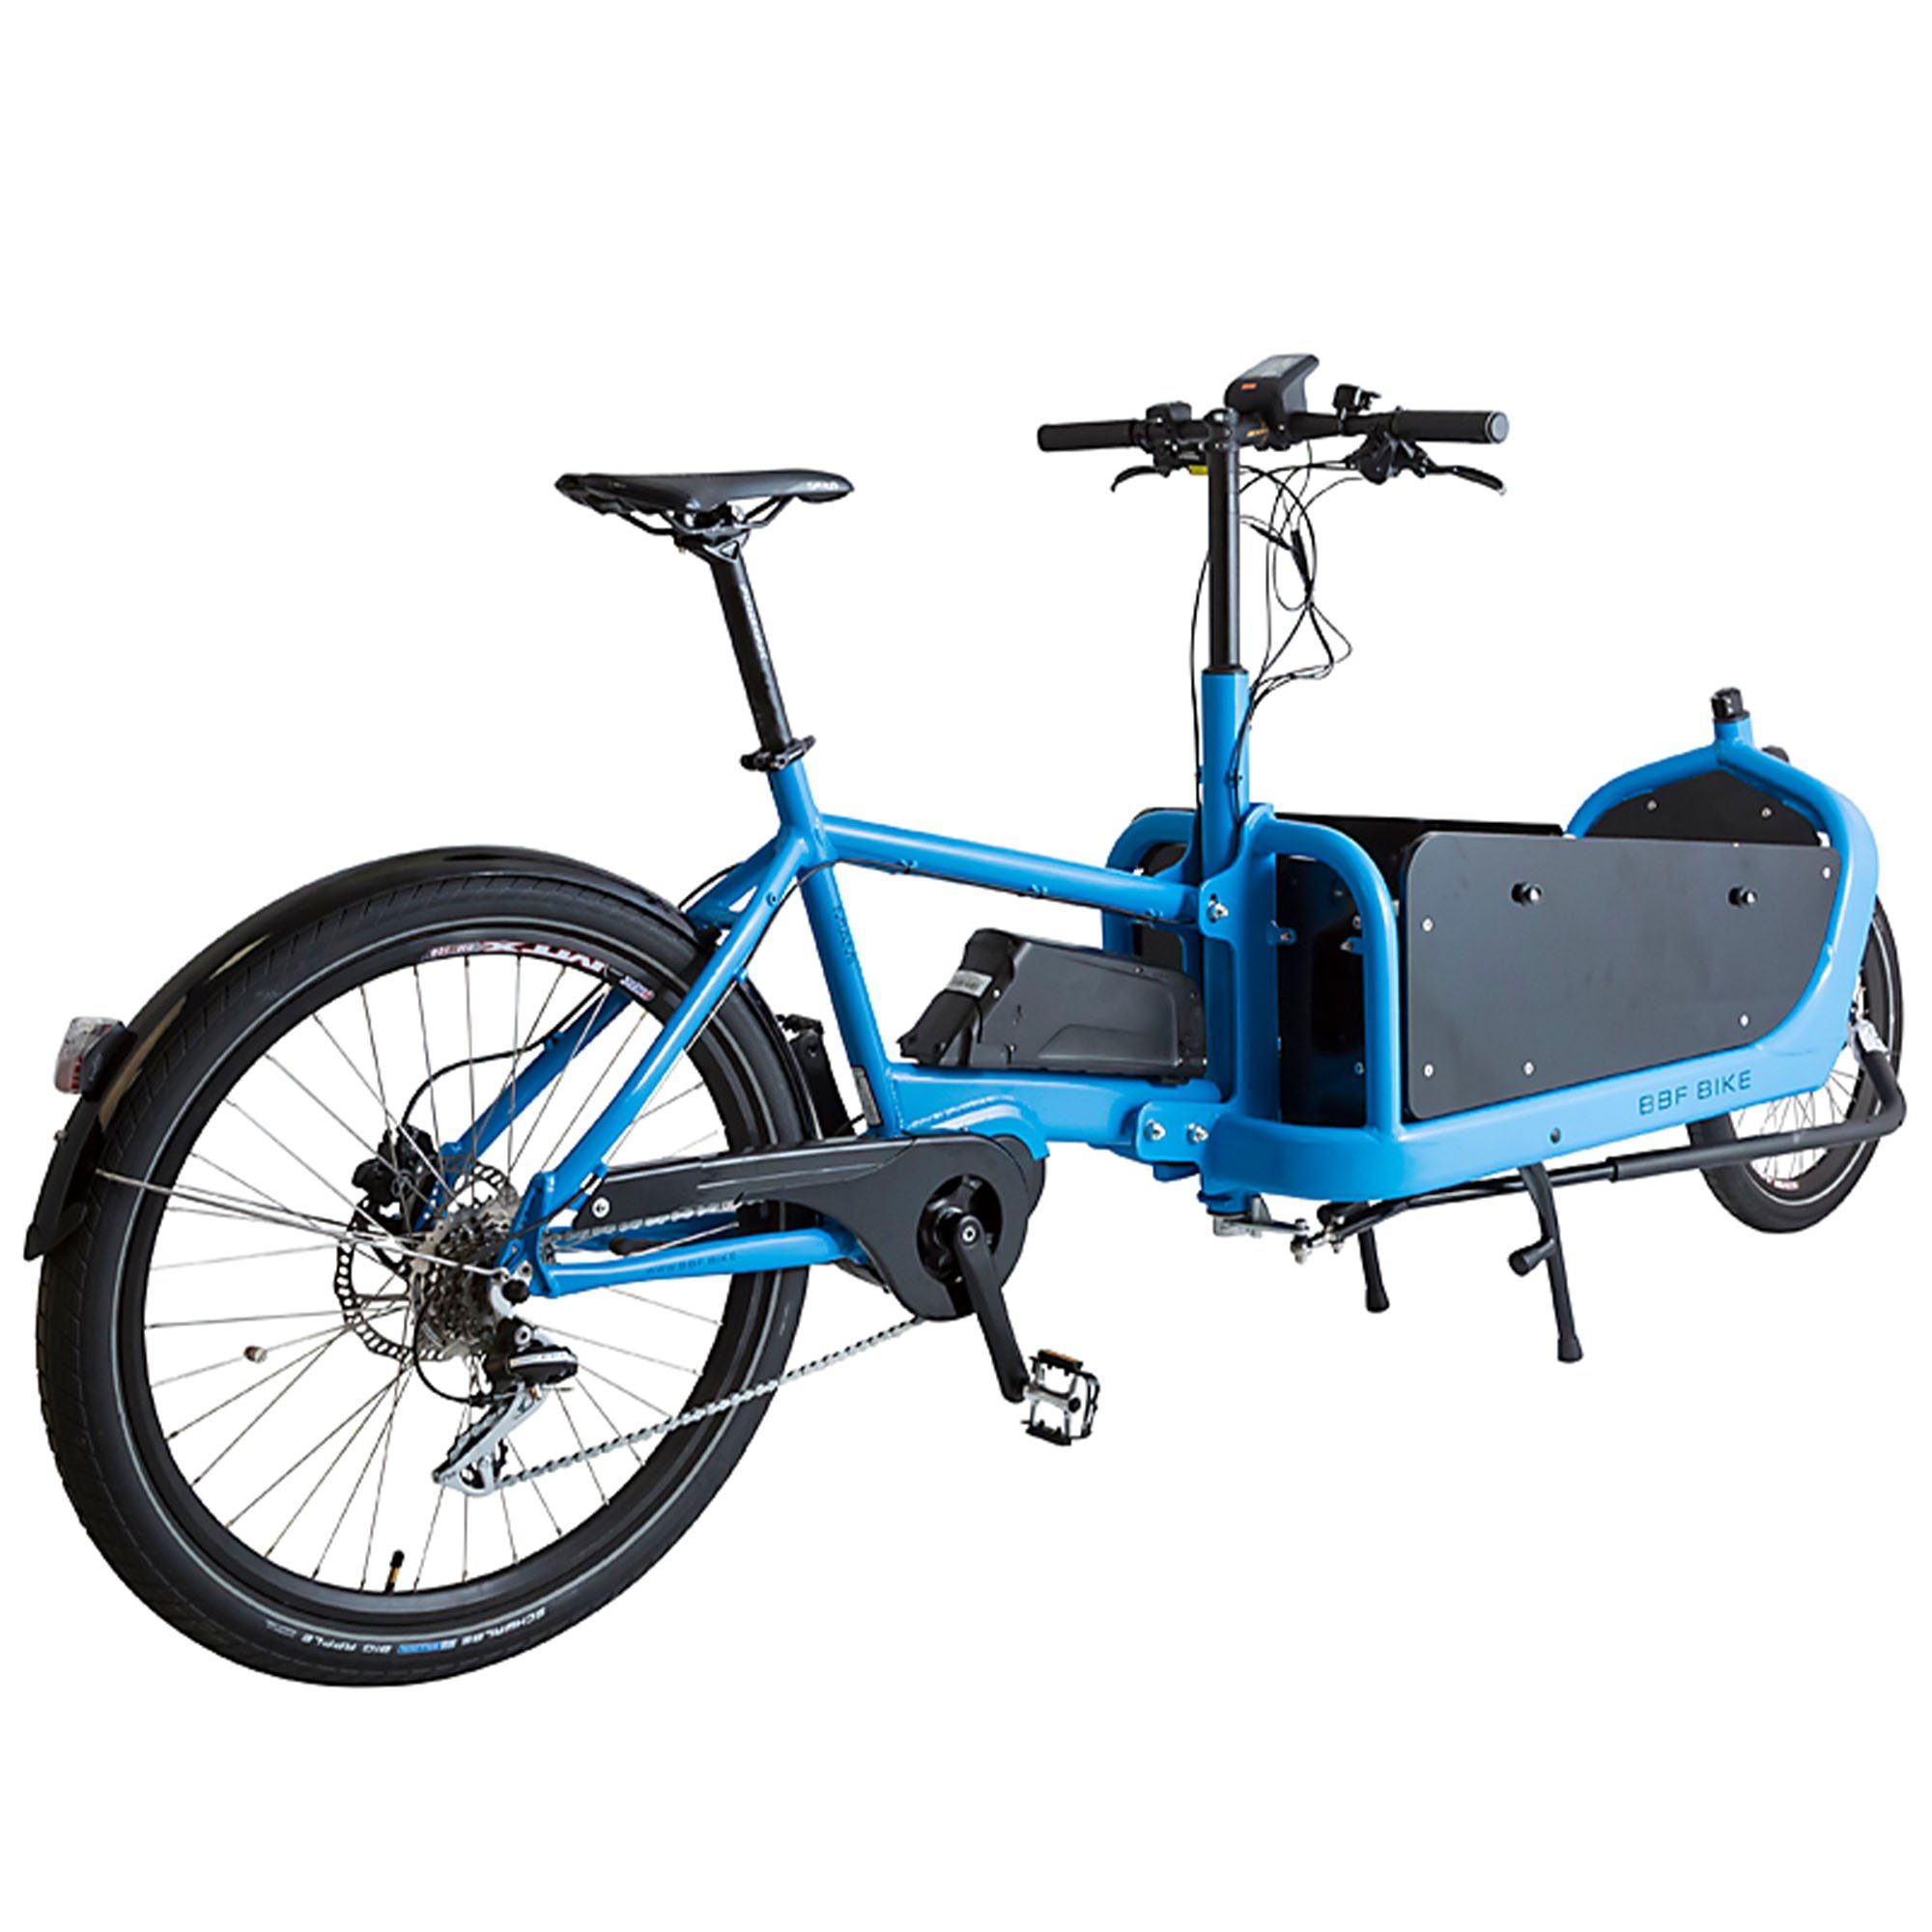 BBF Bikes E-Bike Miami, 8 Gang Shimano Acera Schaltwerk, Kettenschaltung, Mittelmotor, 522 Wh Akku, Lastenfahrrad E Bike Cargobikes Pedelec Transportrad Lastenrad Cargo blau